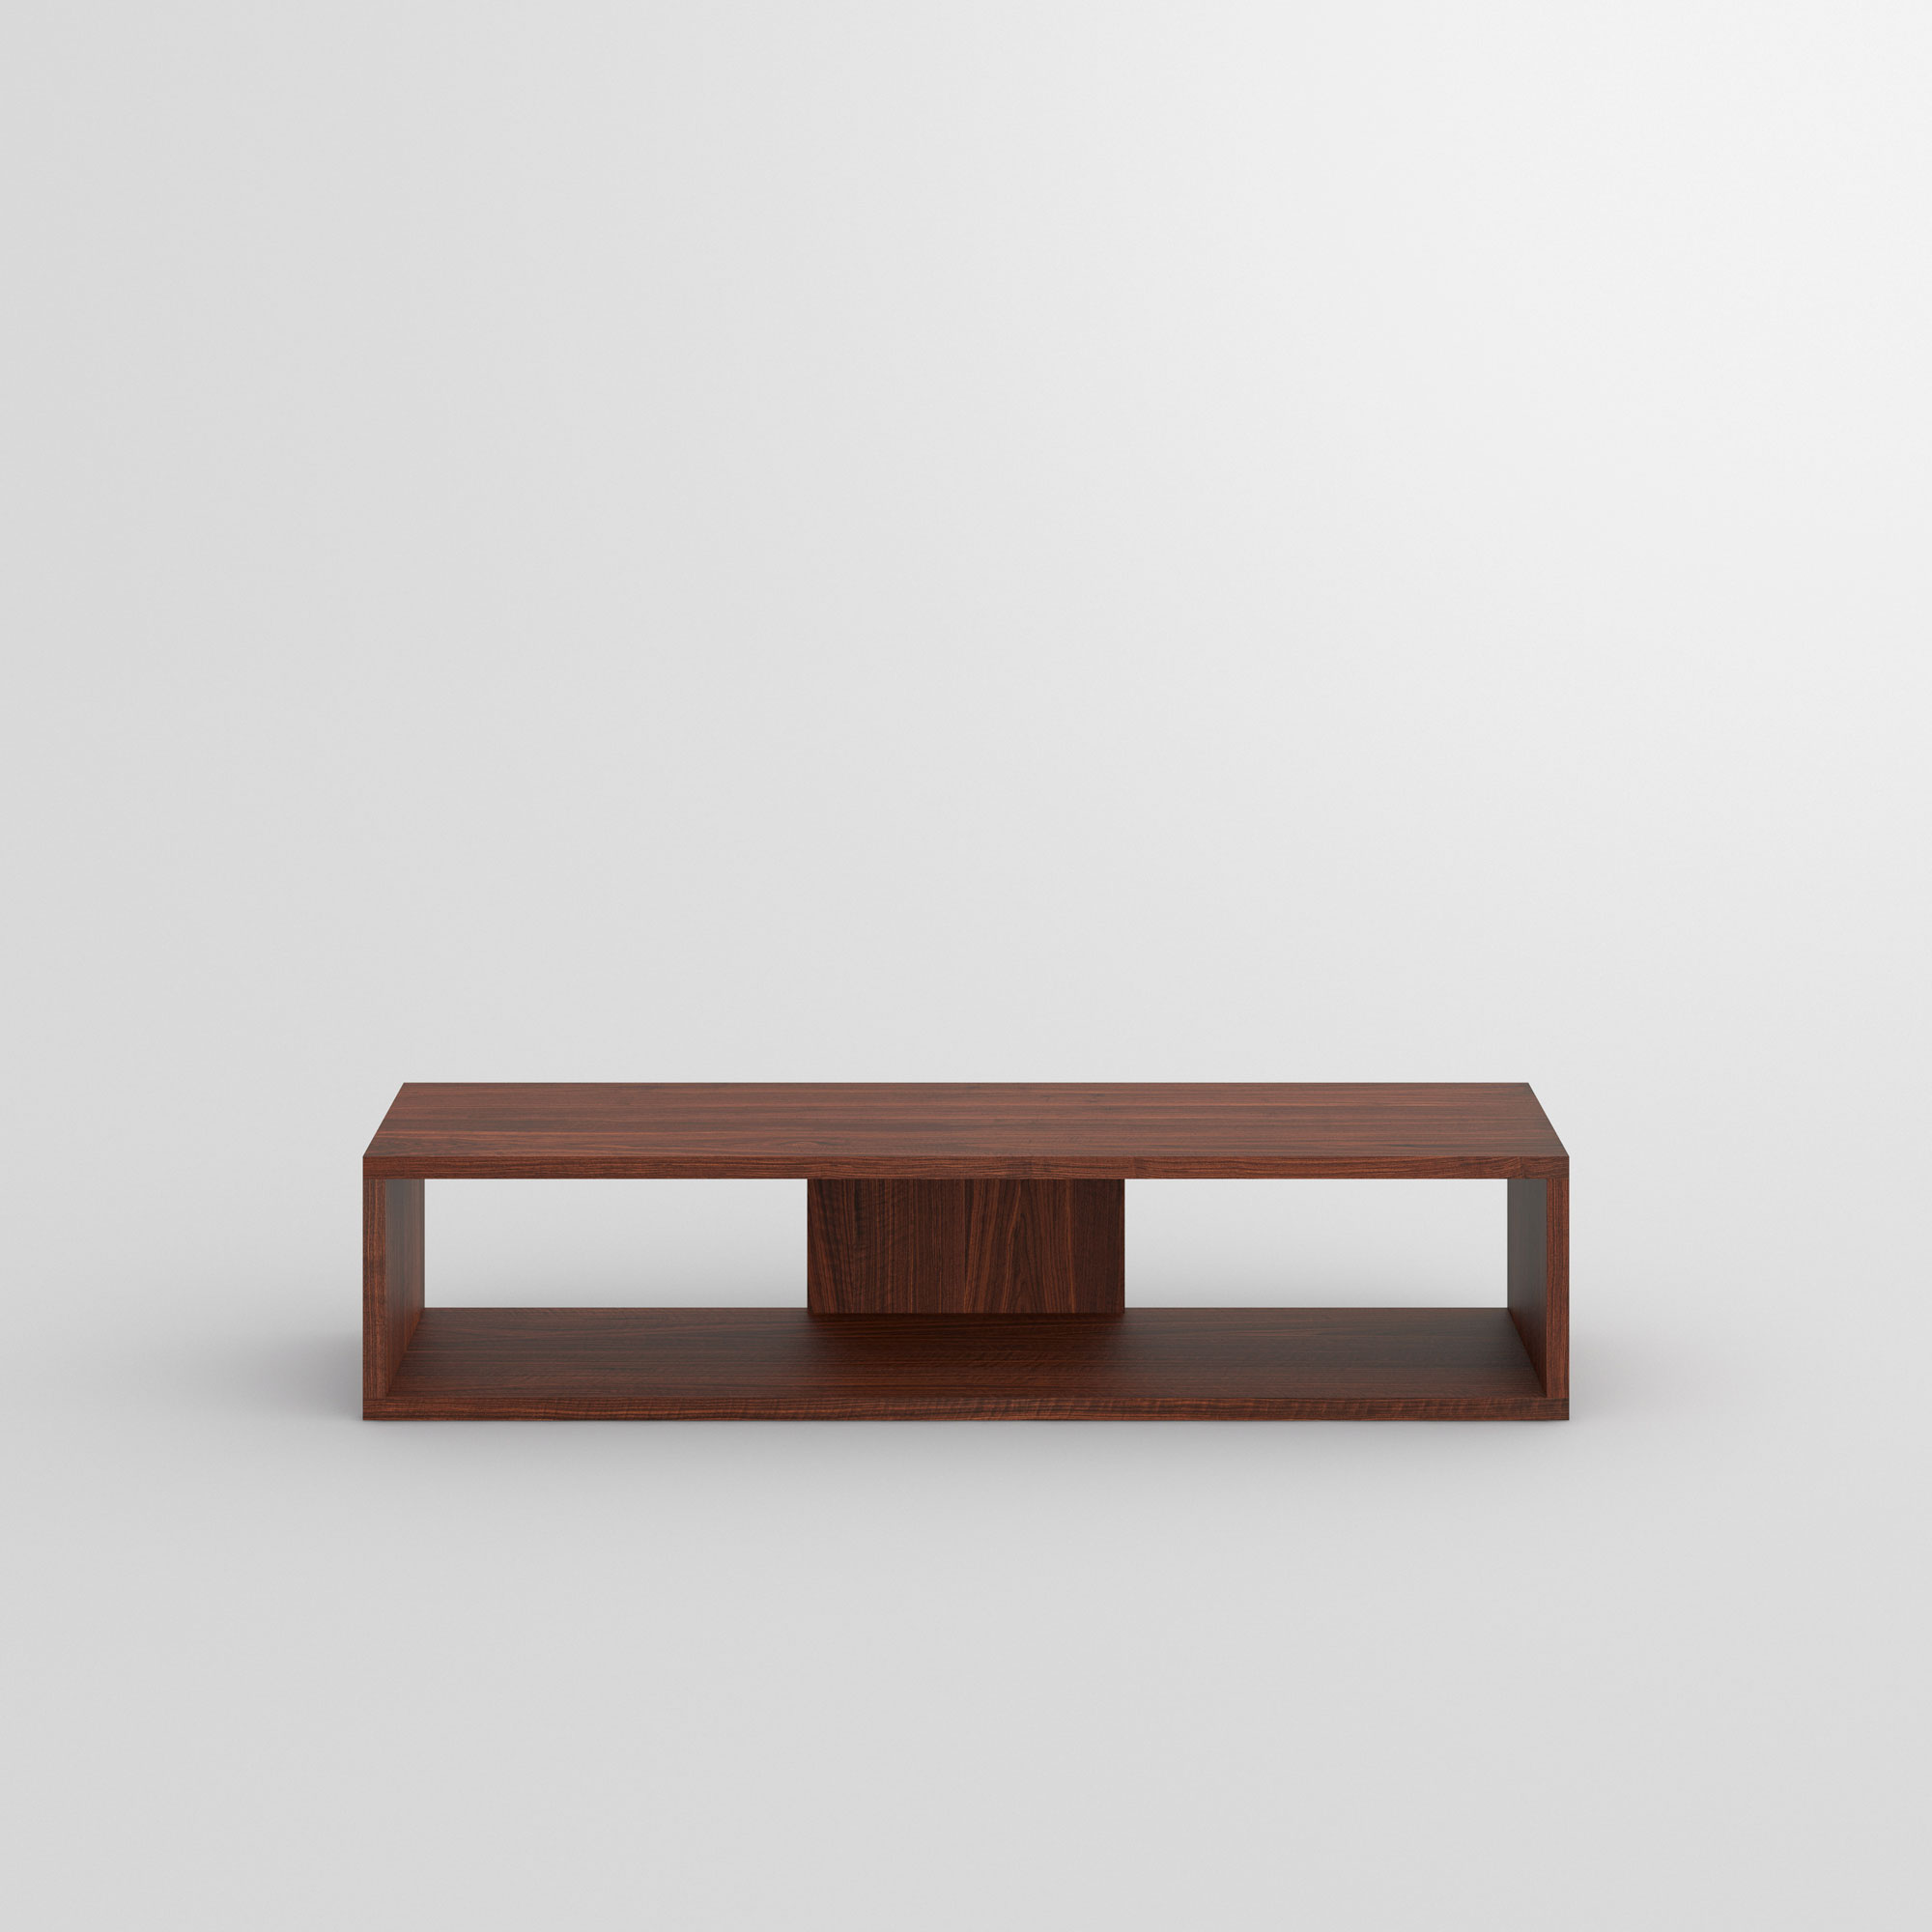 TV Shelf MENA TV cam3 custom made in solid wood by vitamin design